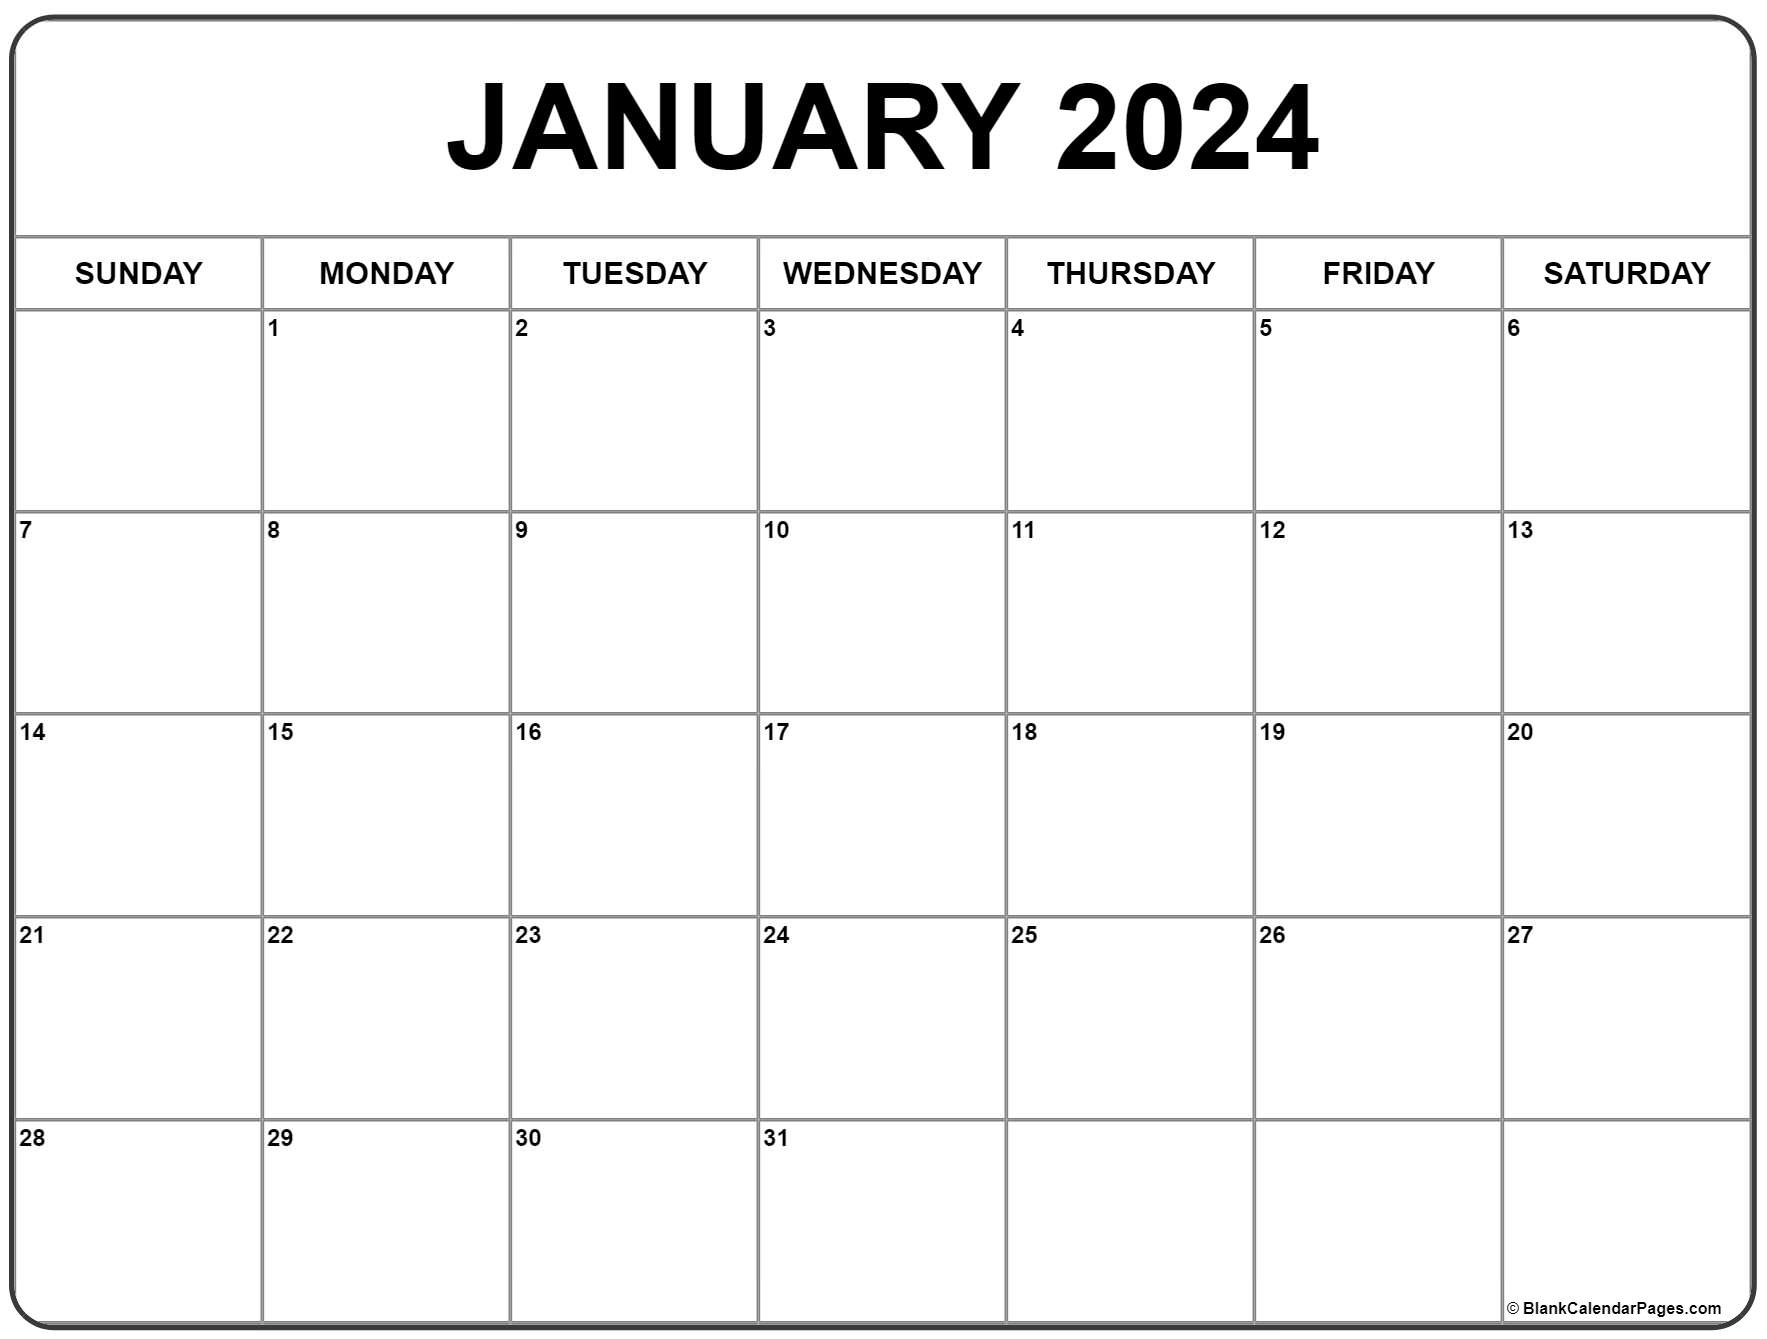 January 2024 Calendar | Free Printable Calendar for Free Printable 2024 Calendar Monthly